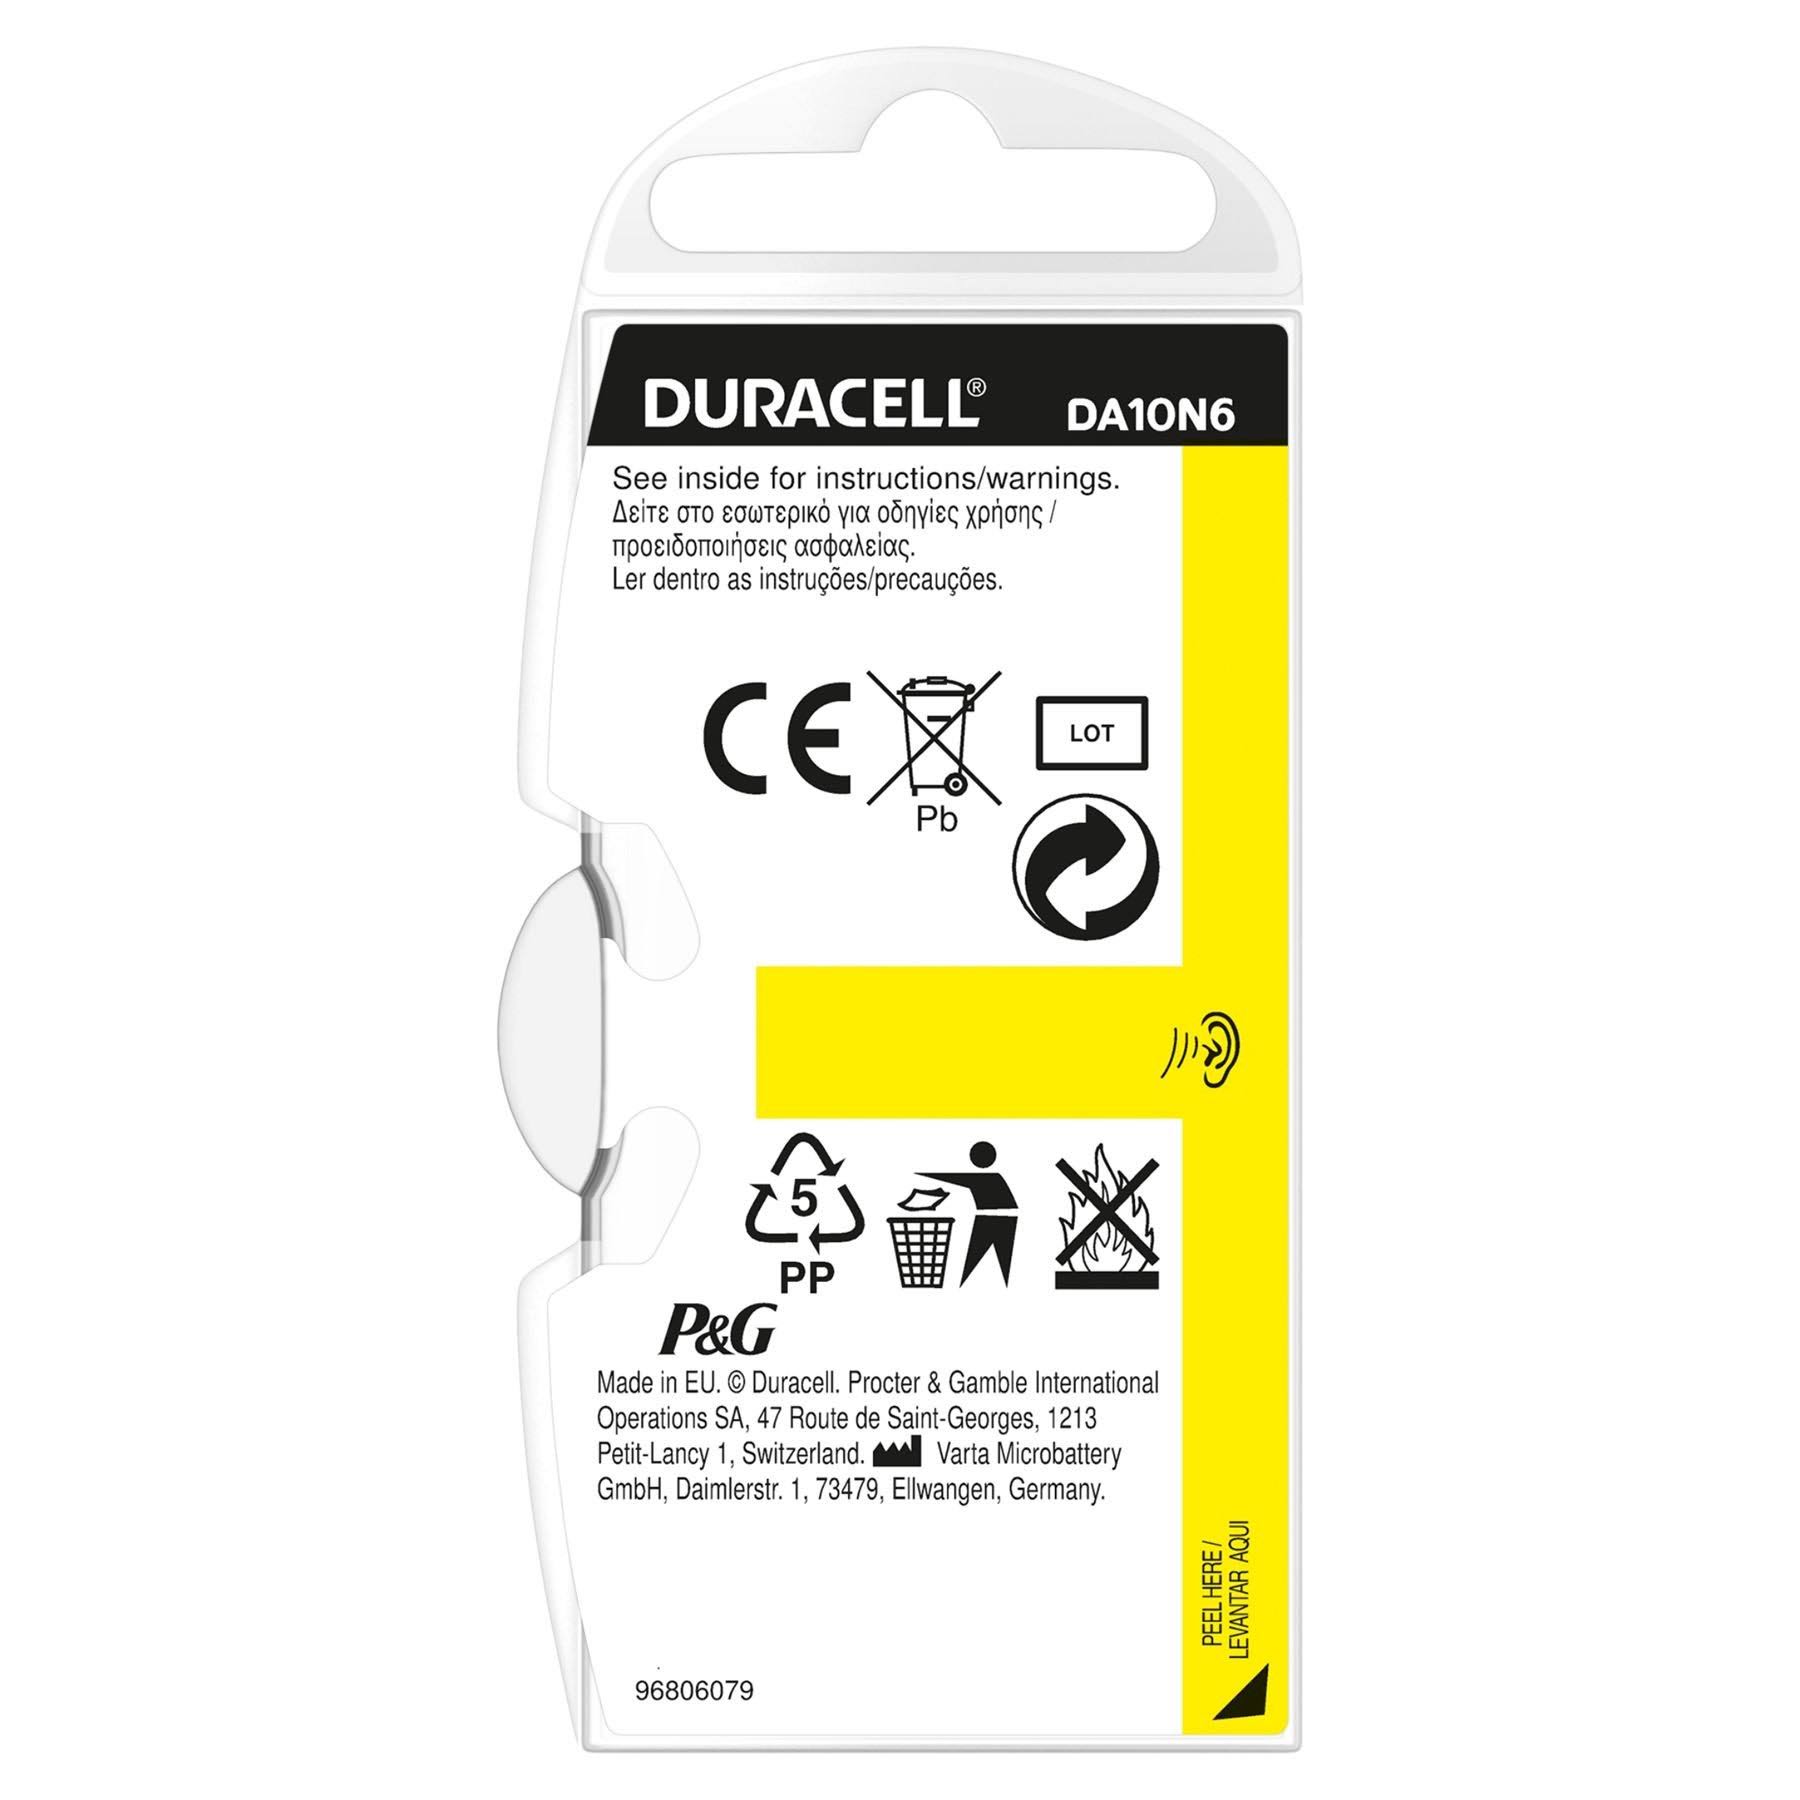 Duracell Hearing Aid 10 Batteries - 6x1.45V